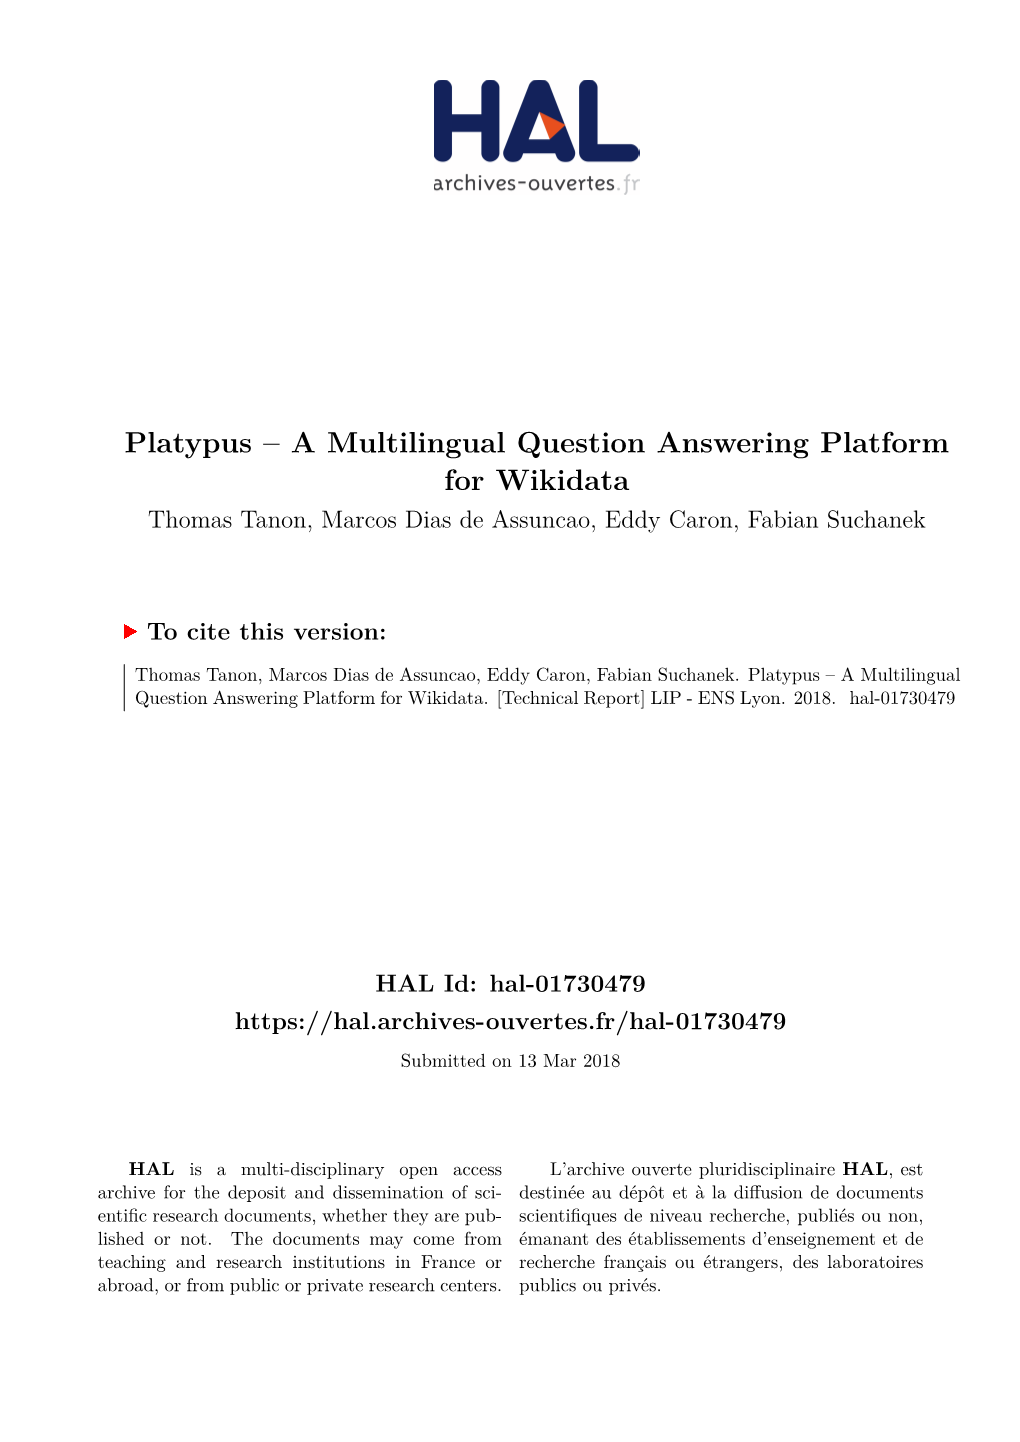 Platypus – a Multilingual Question Answering Platform for Wikidata Thomas Tanon, Marcos Dias De Assuncao, Eddy Caron, Fabian Suchanek